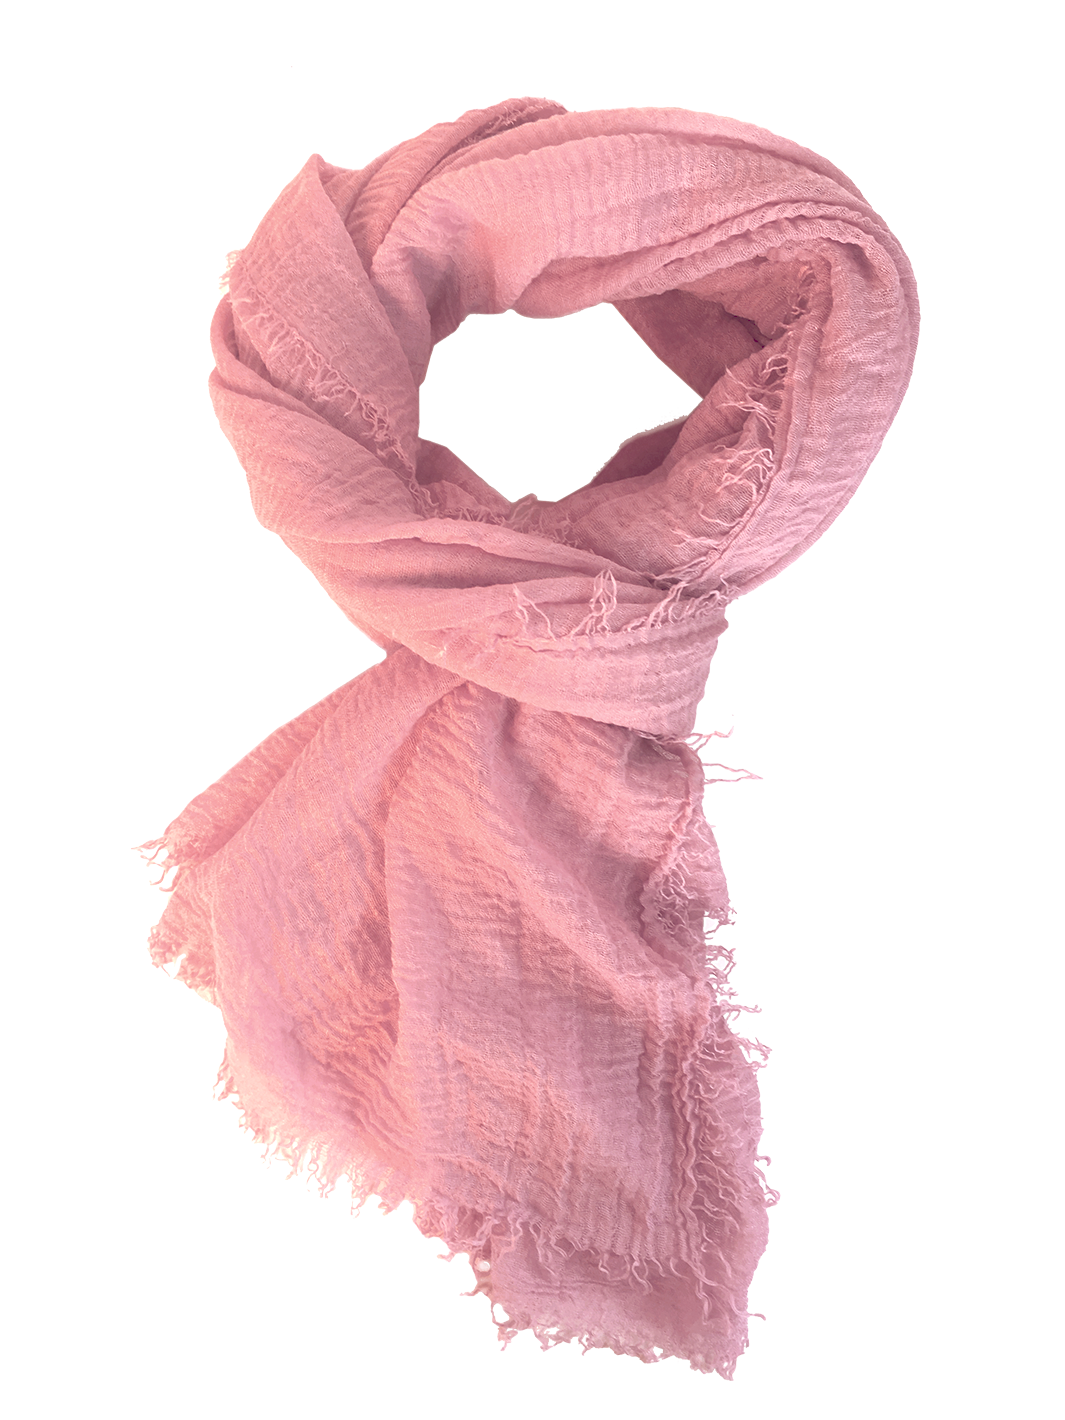 Handwoven Peach-Pink Silk Shawl from Thailand Featuring Stripe Pattern